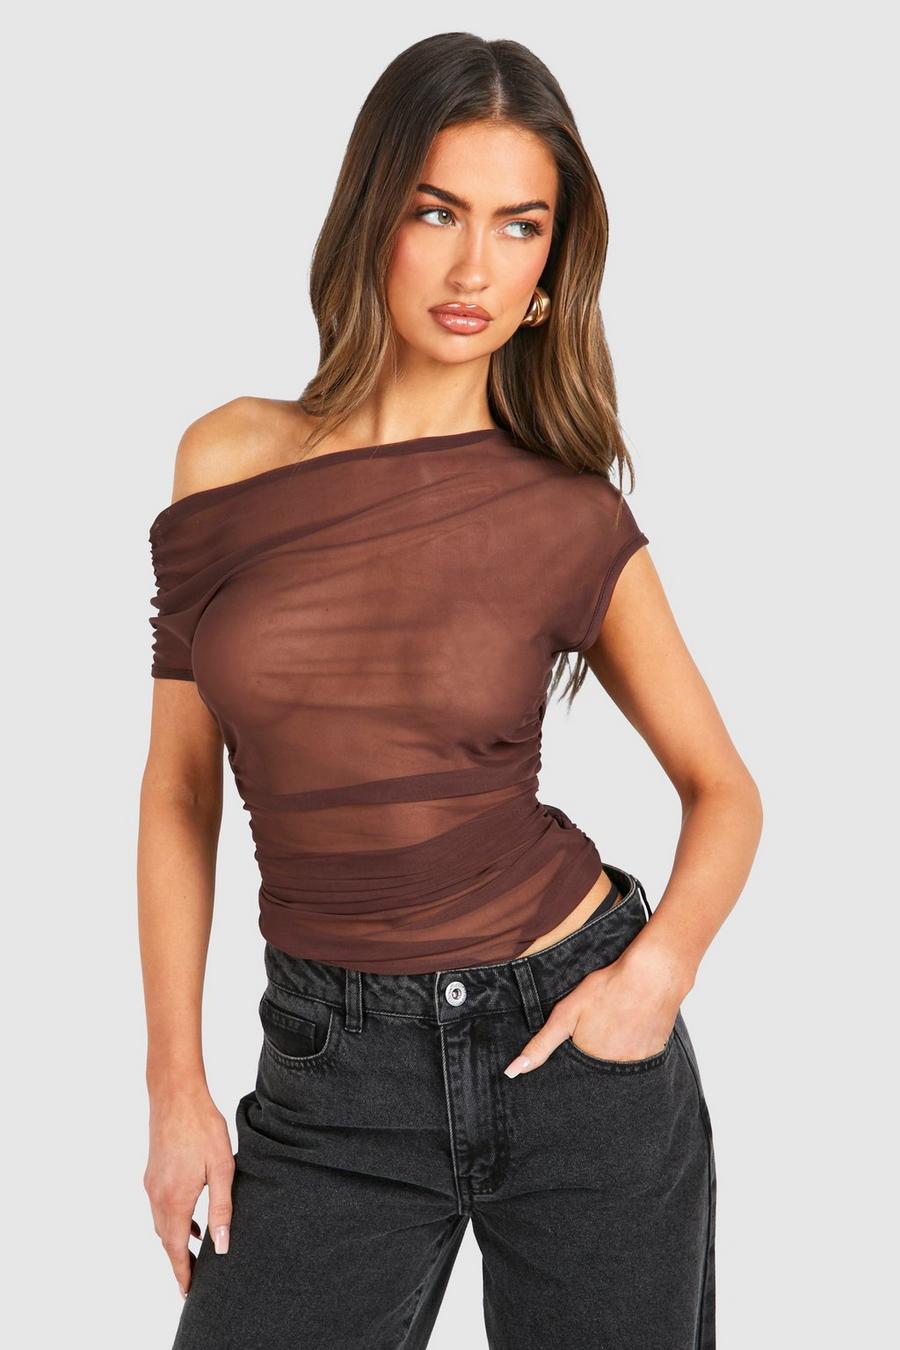 Women Mesh Crop Top Long Sleeve See Through Shirt Sheer Blouse S